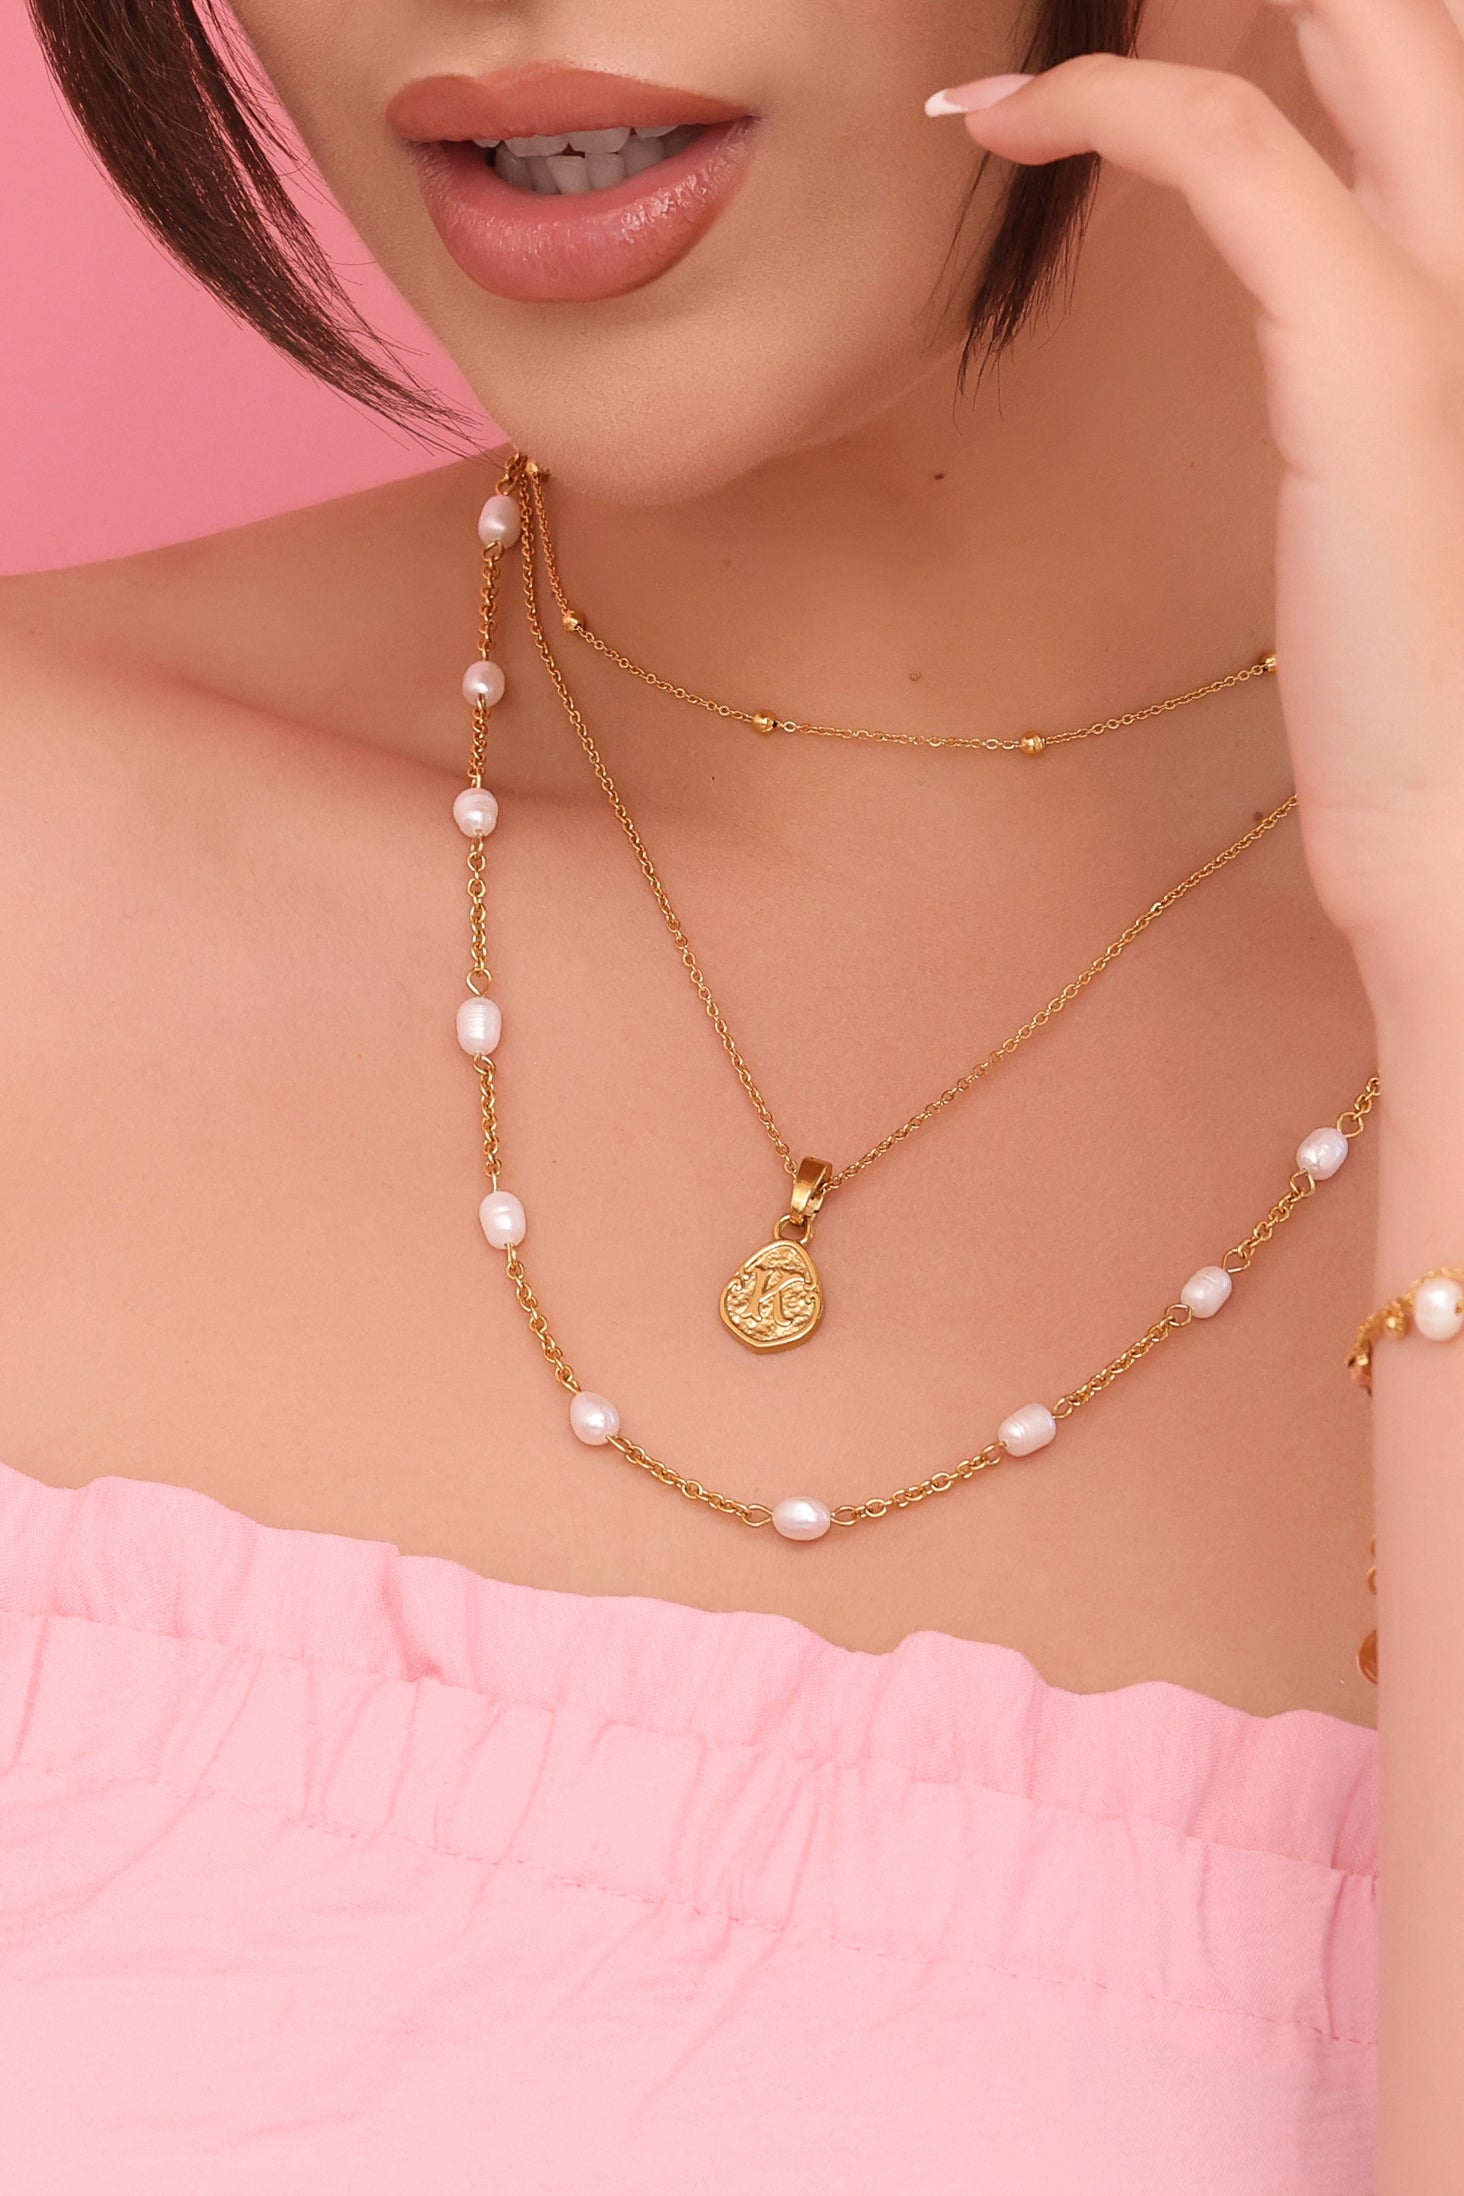 &quot;I&quot; Tberfil Letter Pendant with Petite Adjustable Chain Necklace